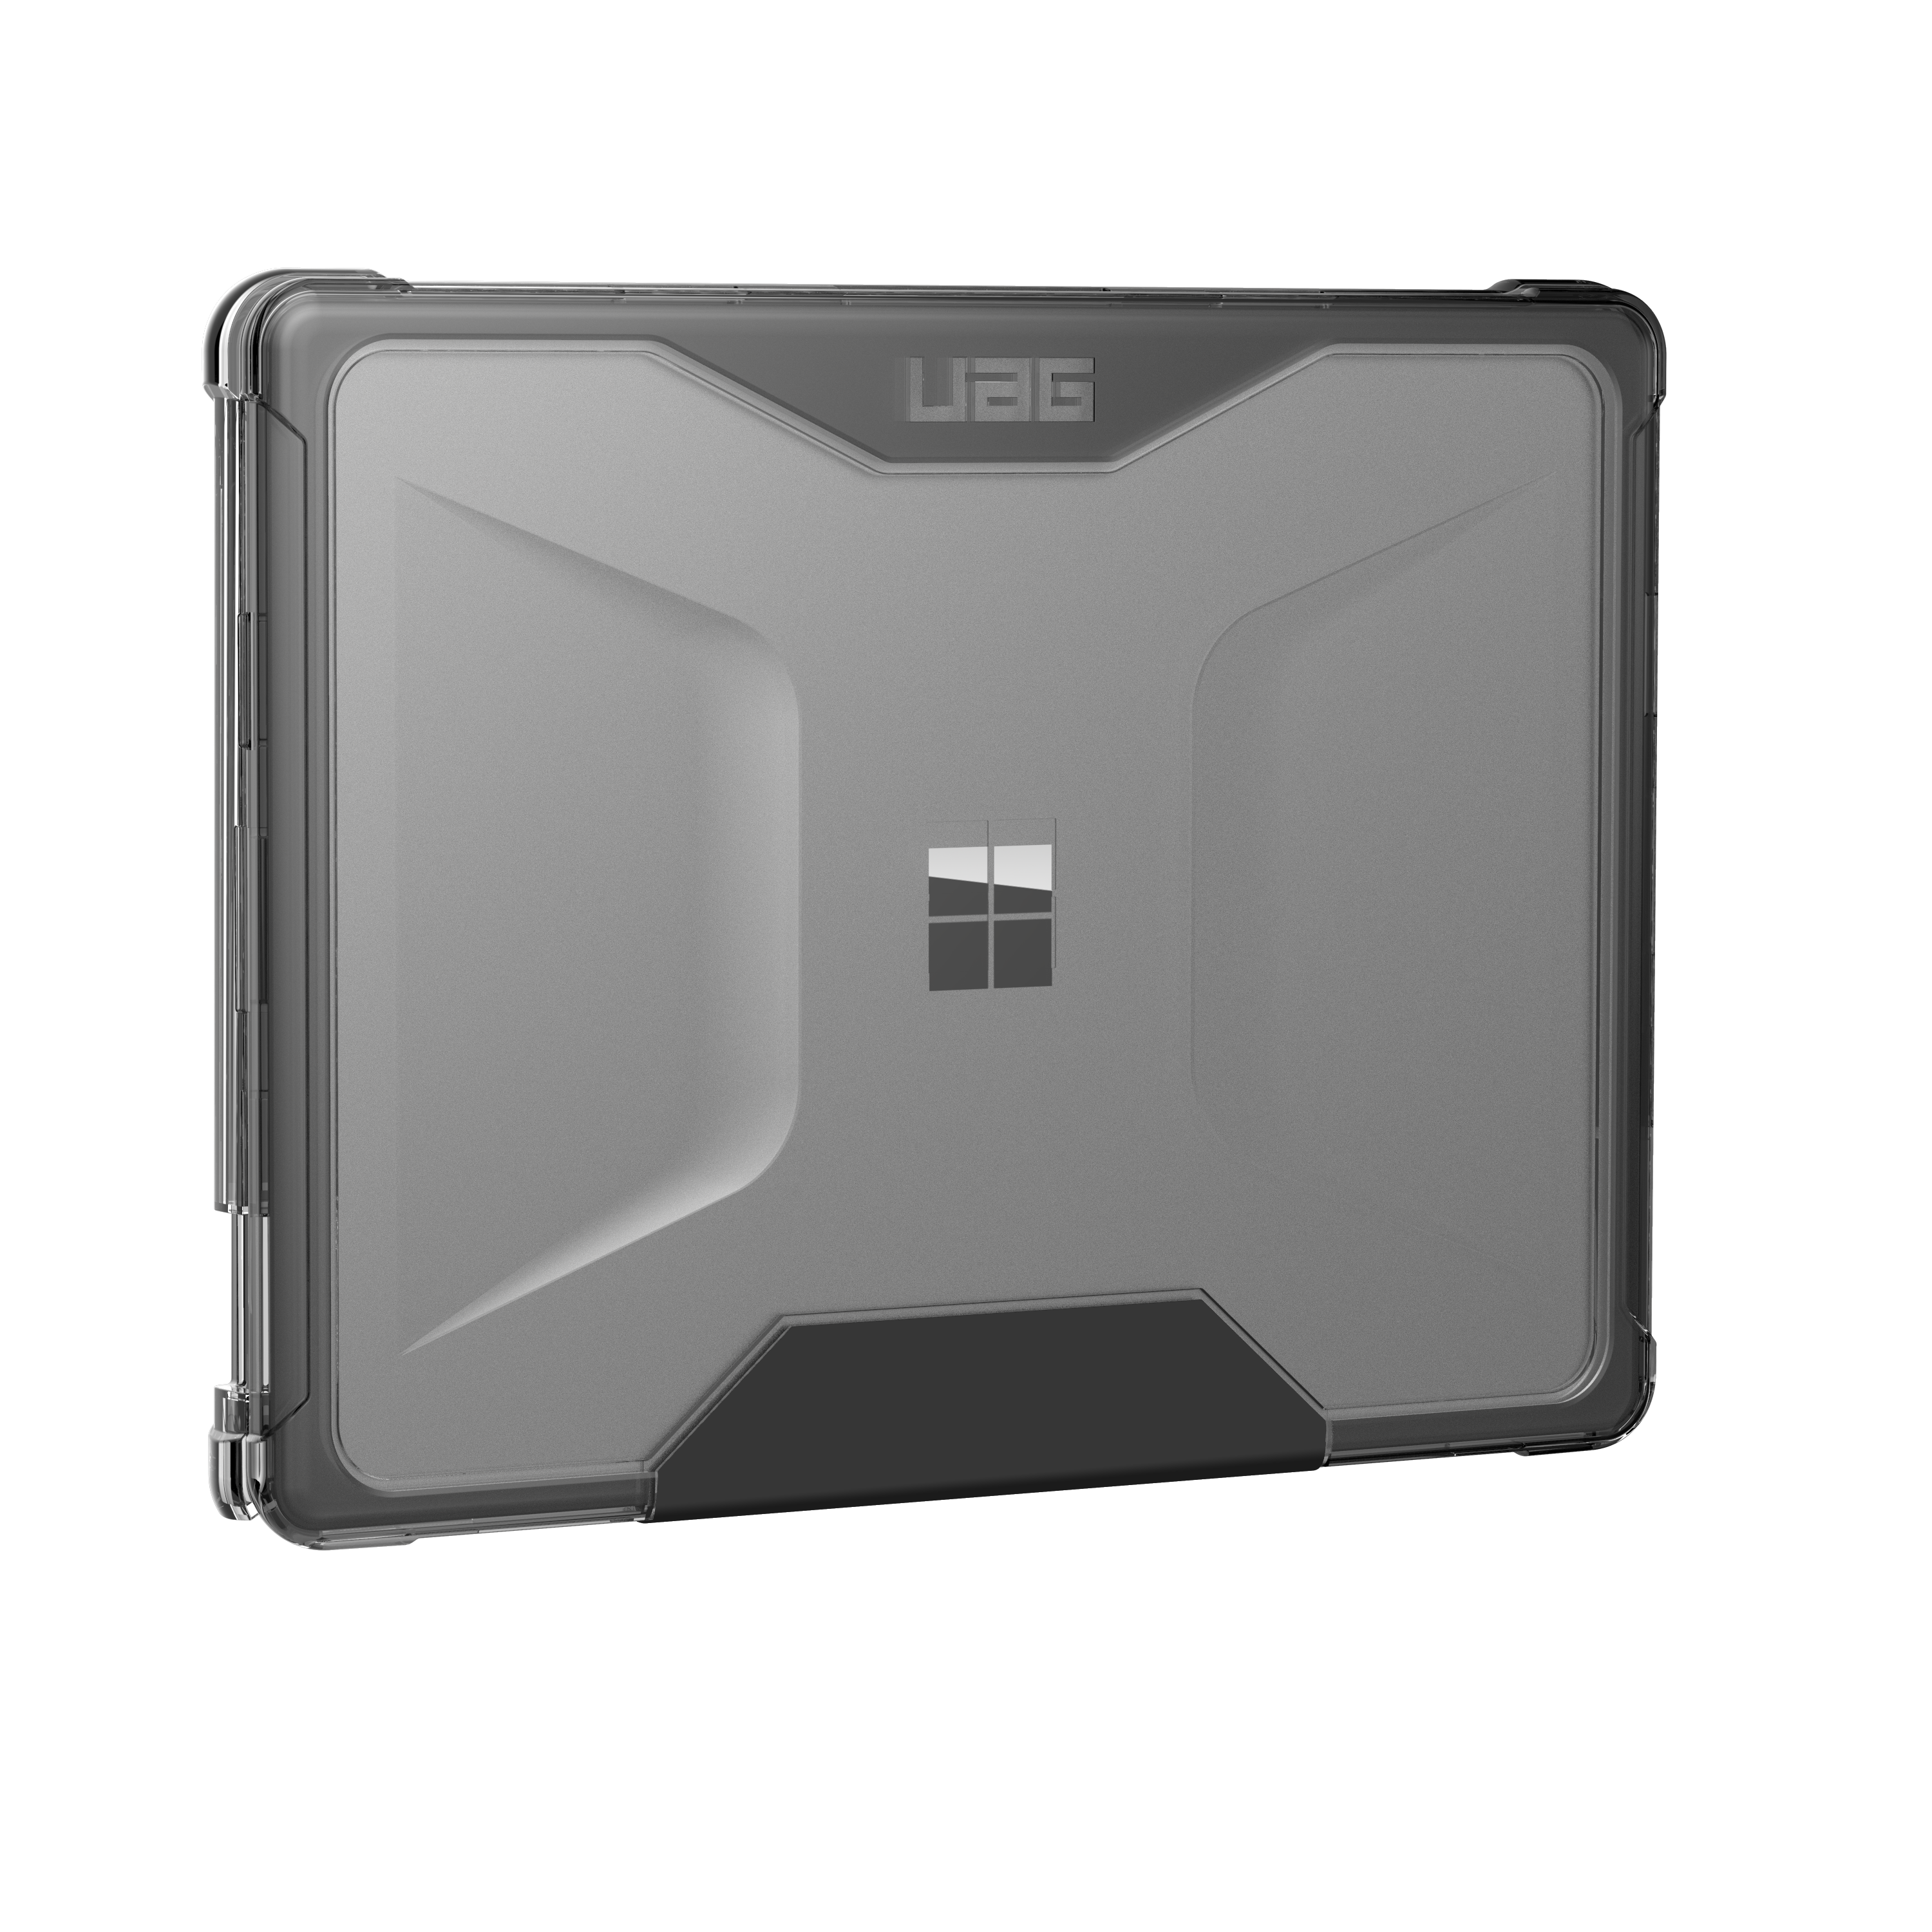 UAG Surface Pro 9 Case Plasma Durable Military Drop Tested